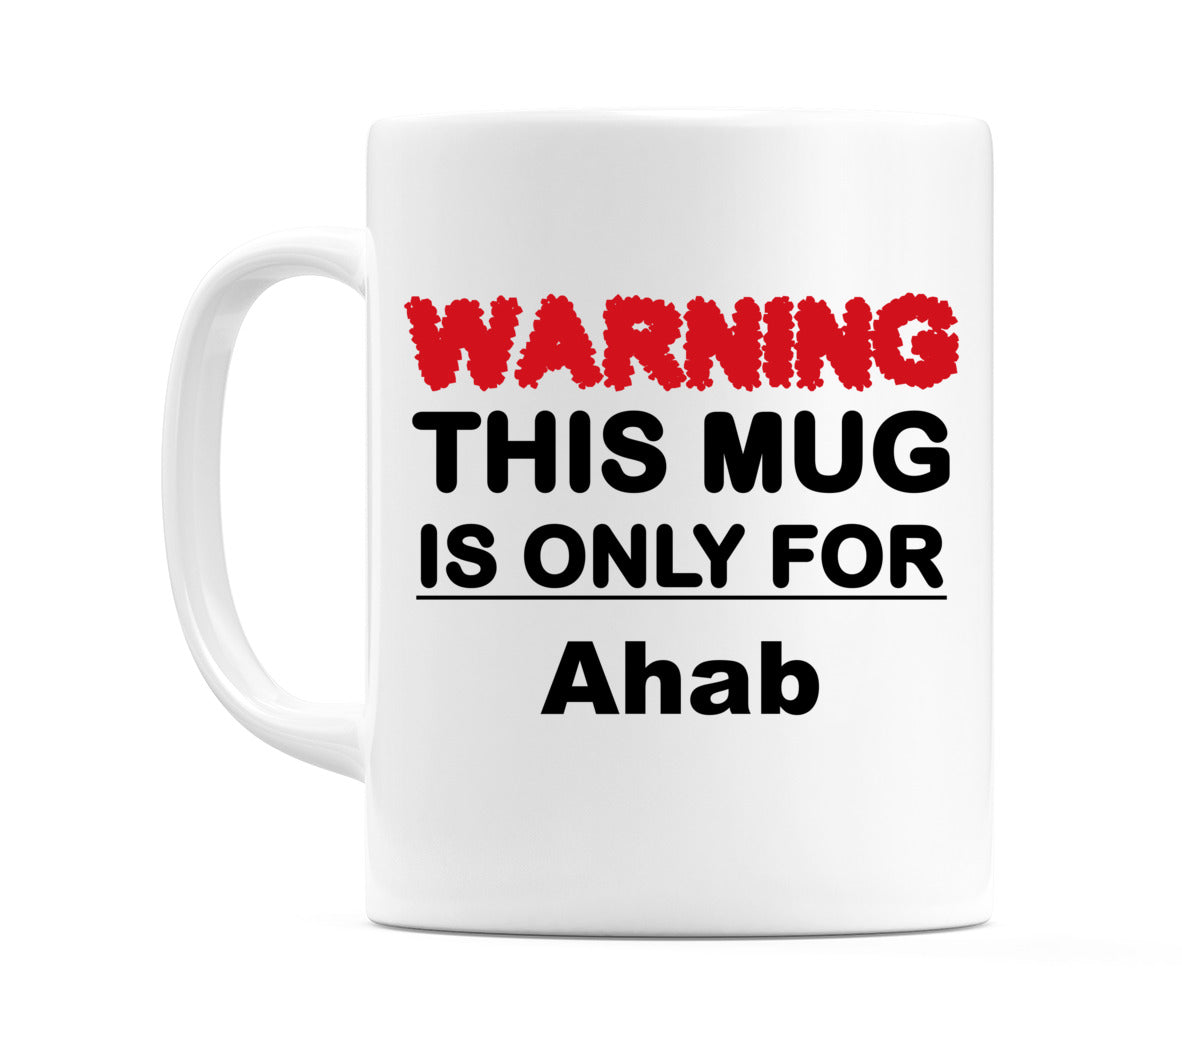 Warning This Mug is ONLY for Ahab Mug